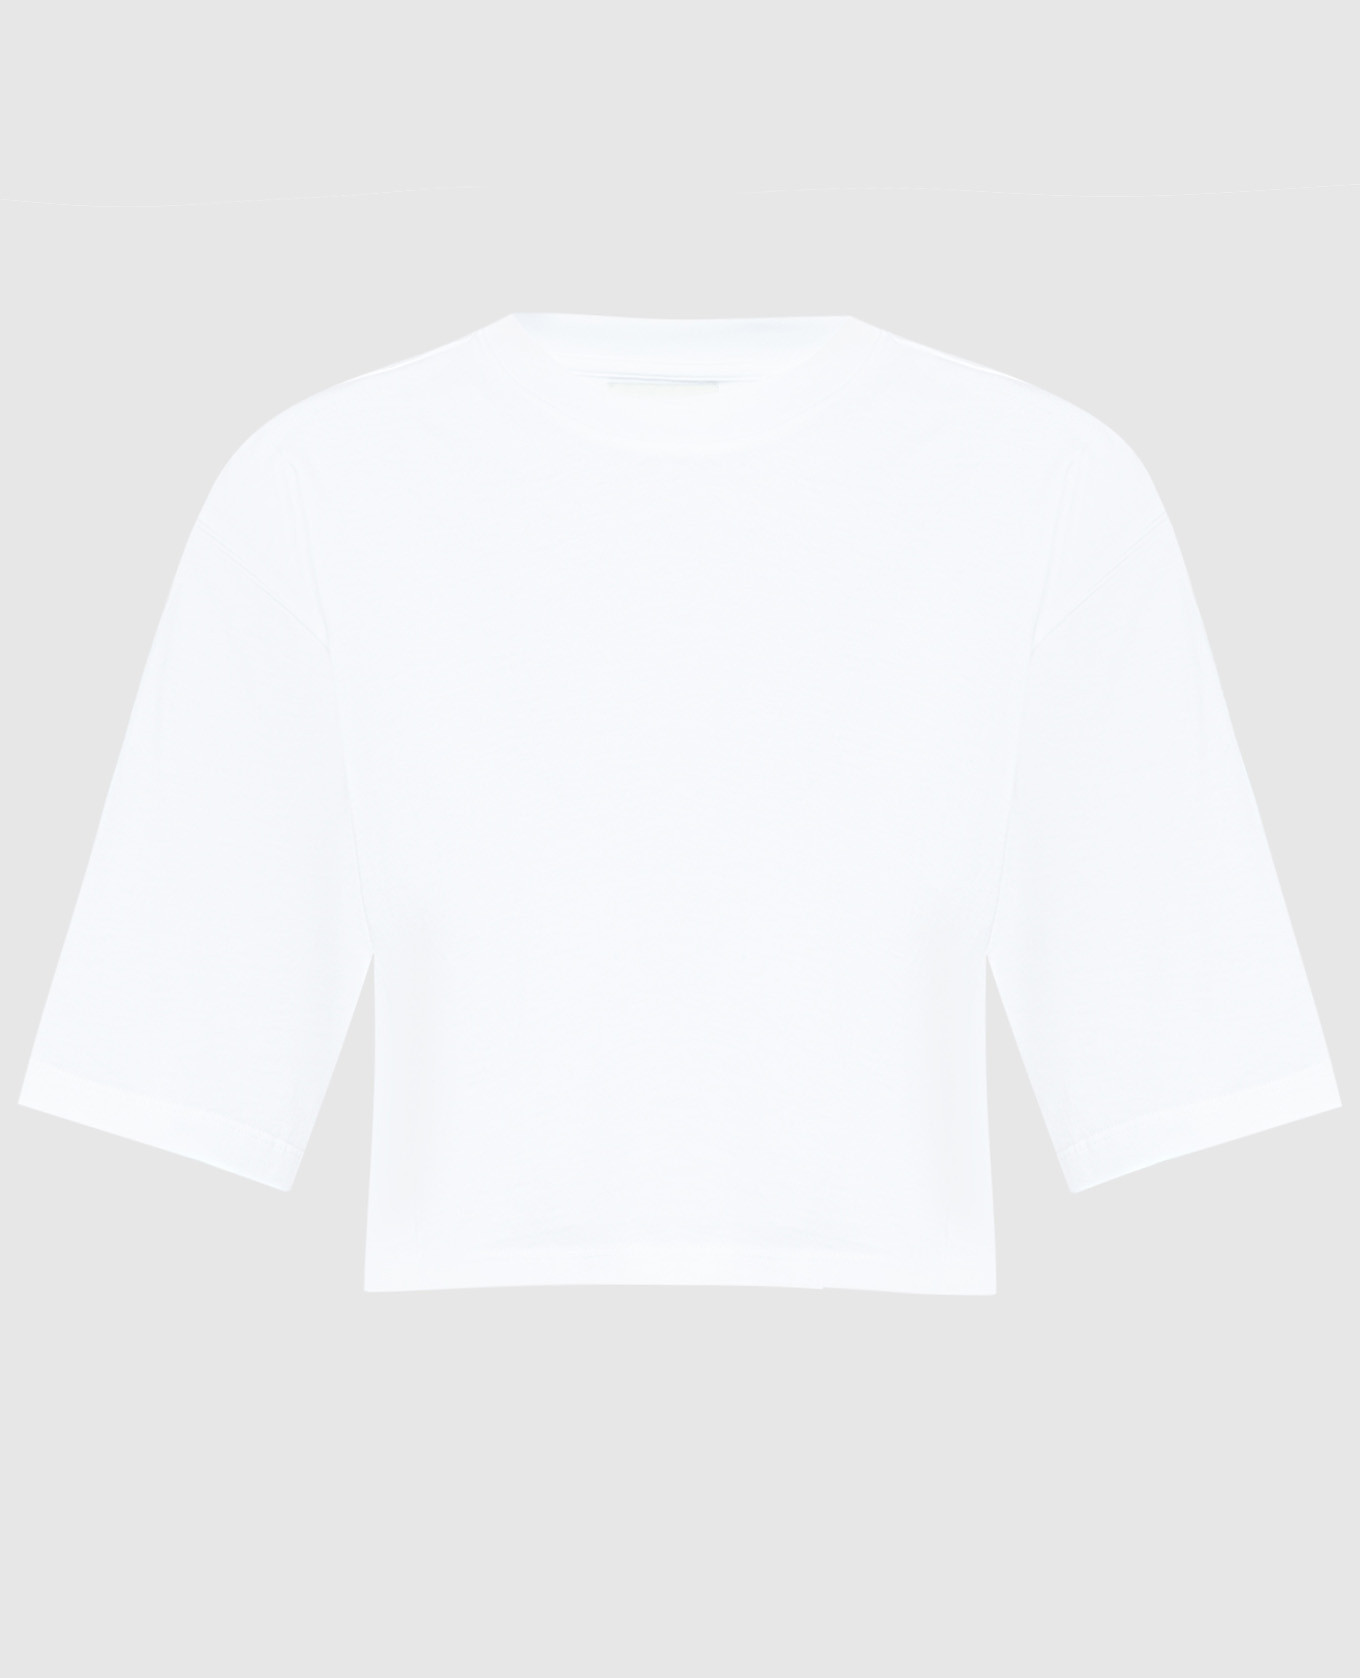 White cropped GUPO logo t-shirt